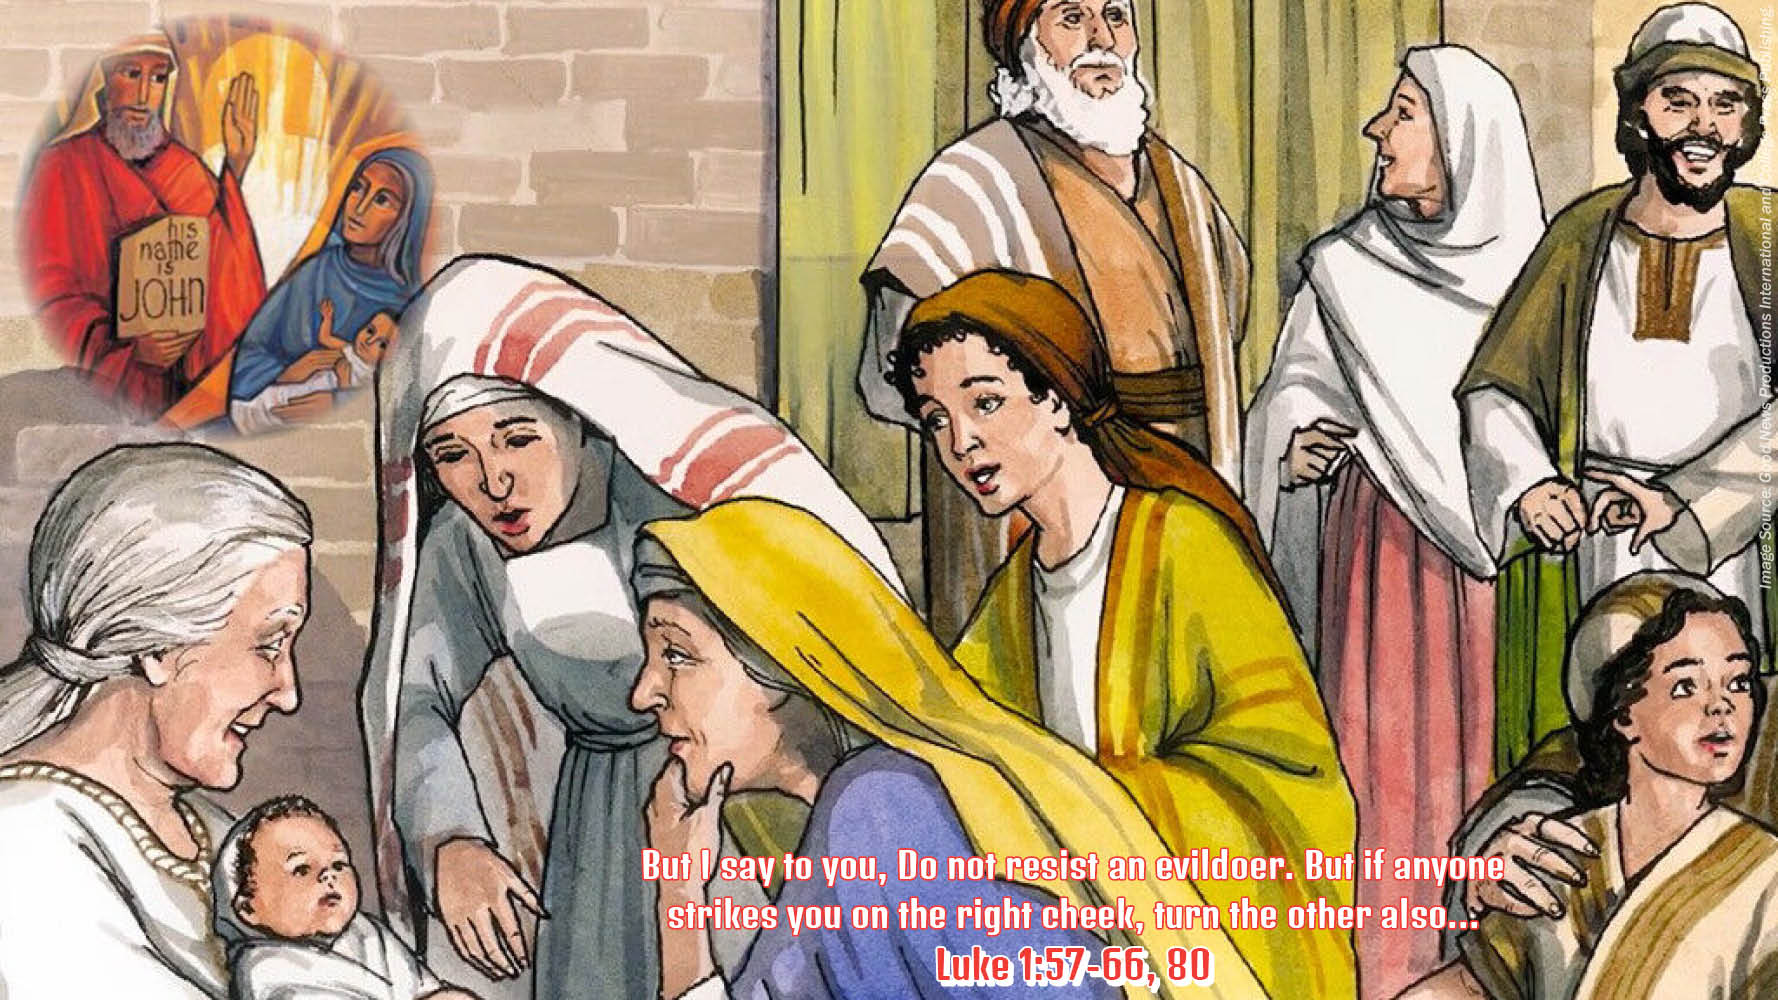 The Birth of John the Baptist